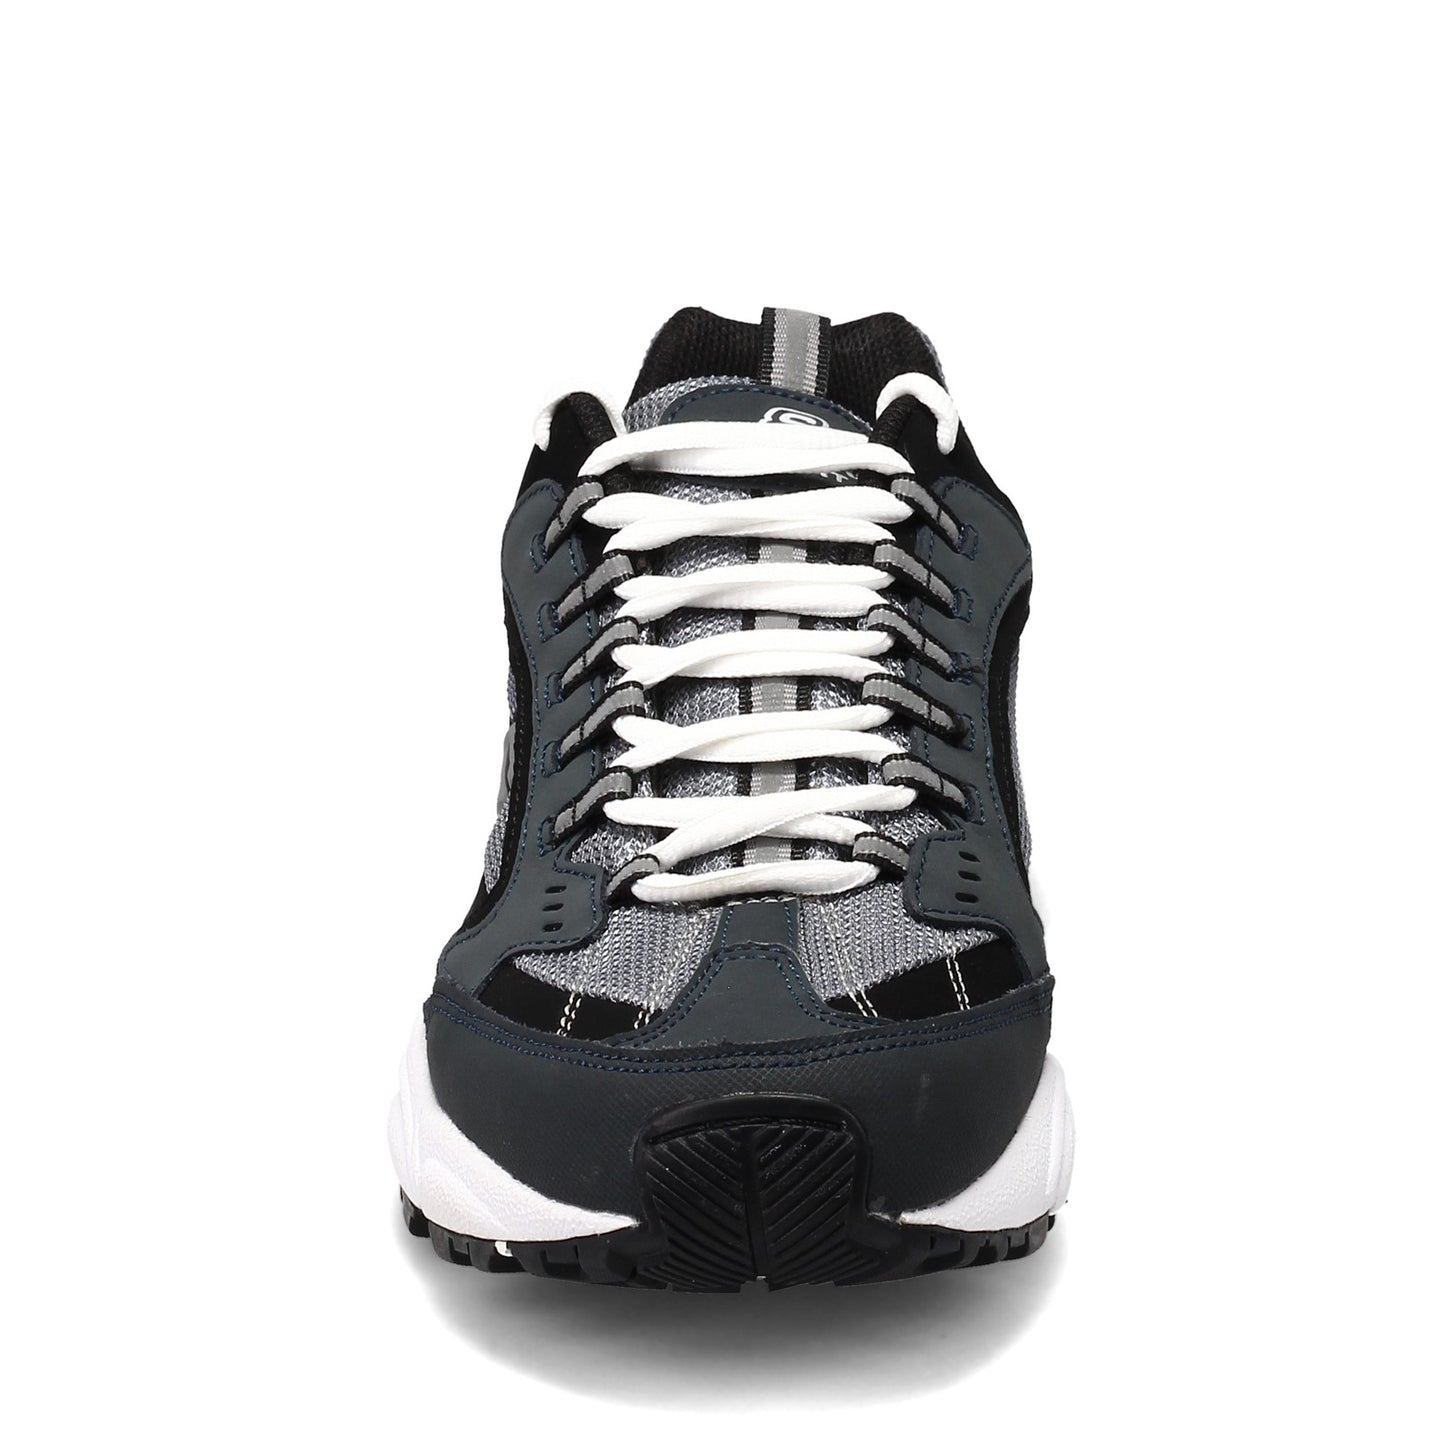 Peltz Shoes  Men's Skechers Stamina - Cutback Sneaker - Wide Width Navy/Black 51286EW-NVBK